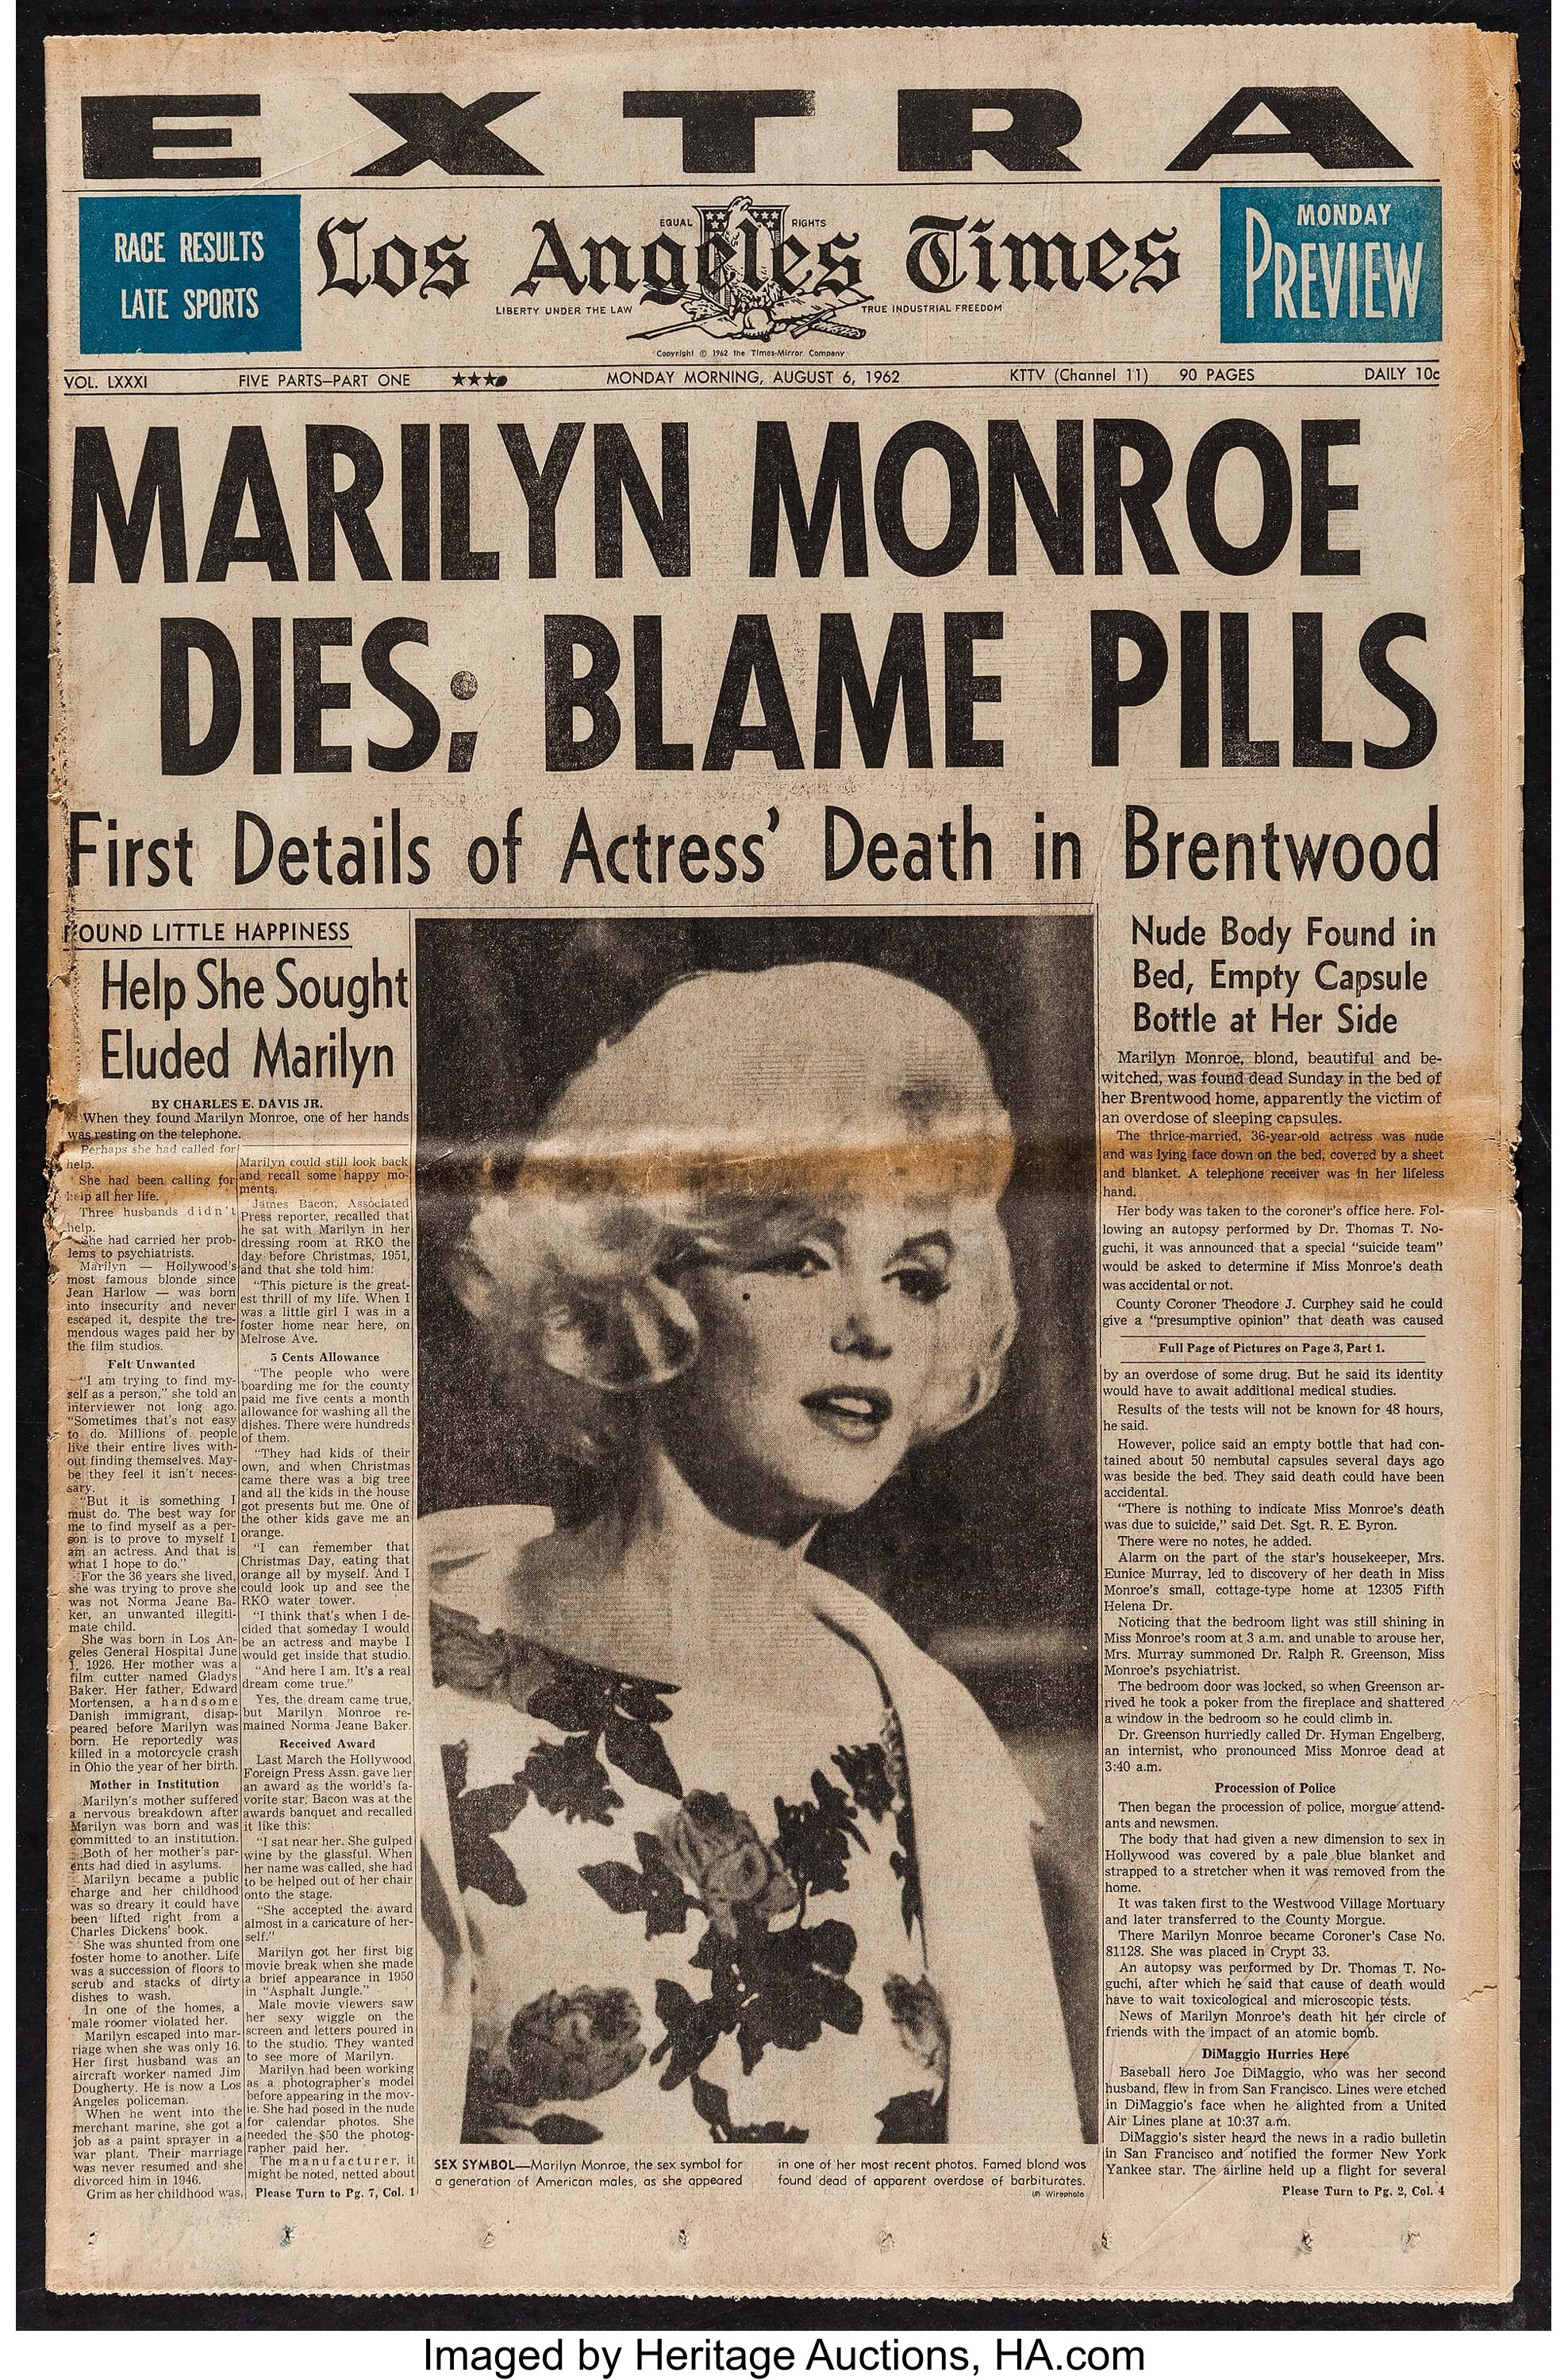 How did Marilyn Monroe die? The details behind the mysterious